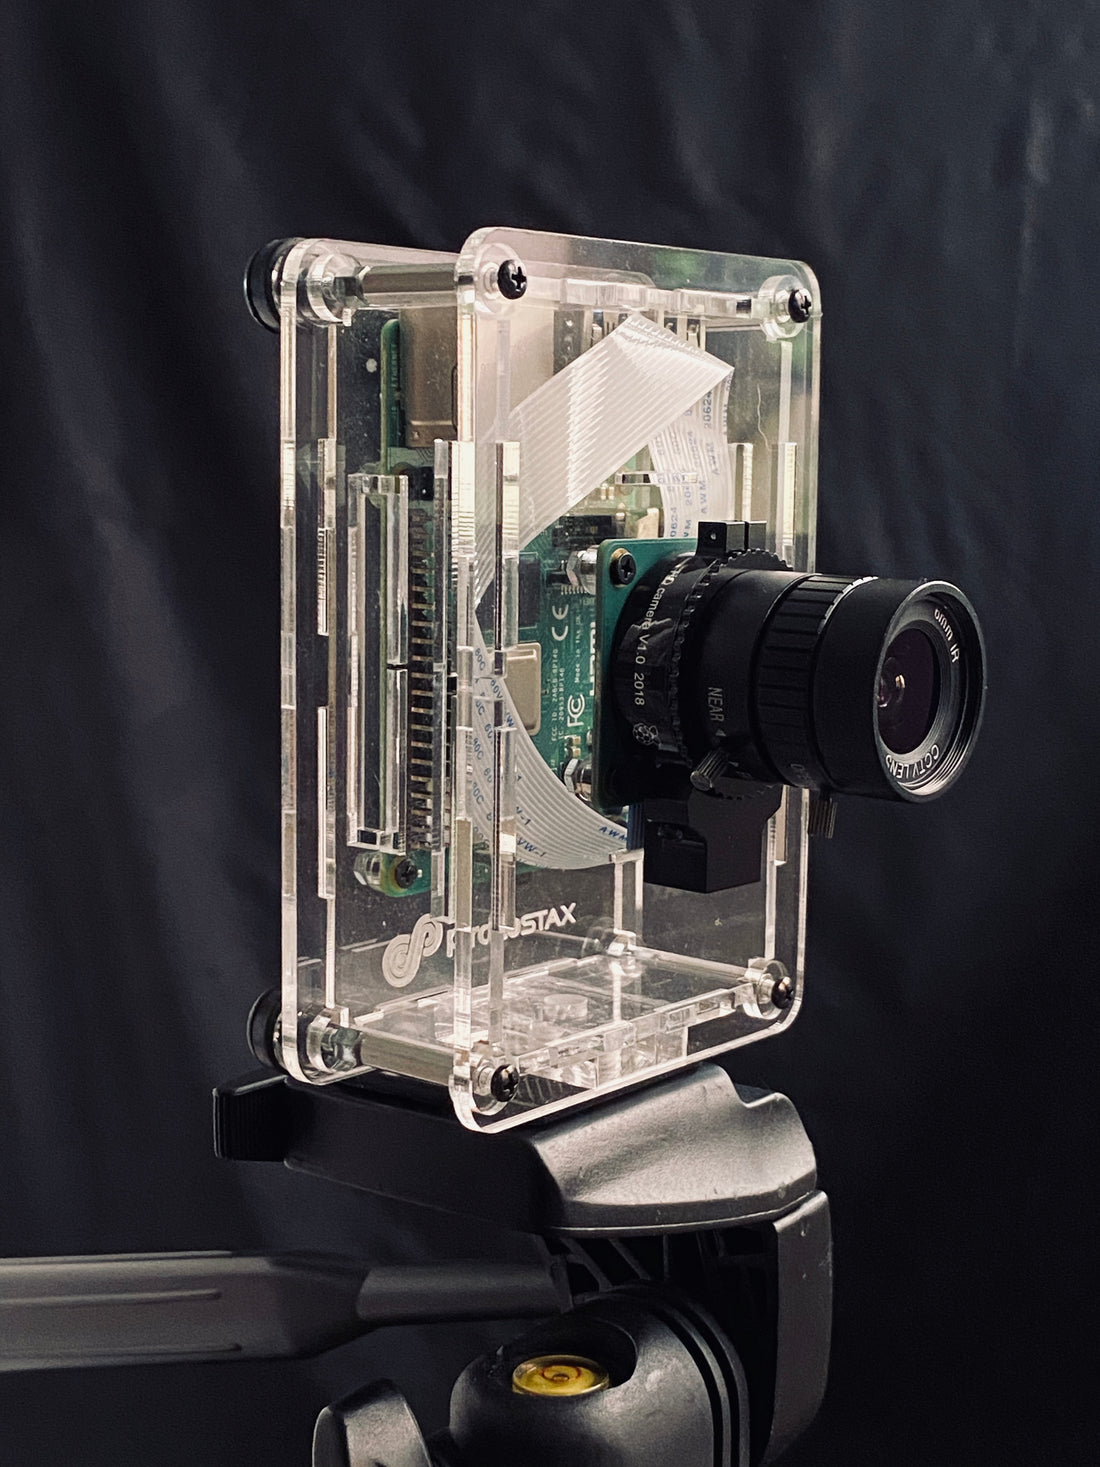 Raspberry Pi High Quality Camera Headless Preview Setup Tips with ProtoStax